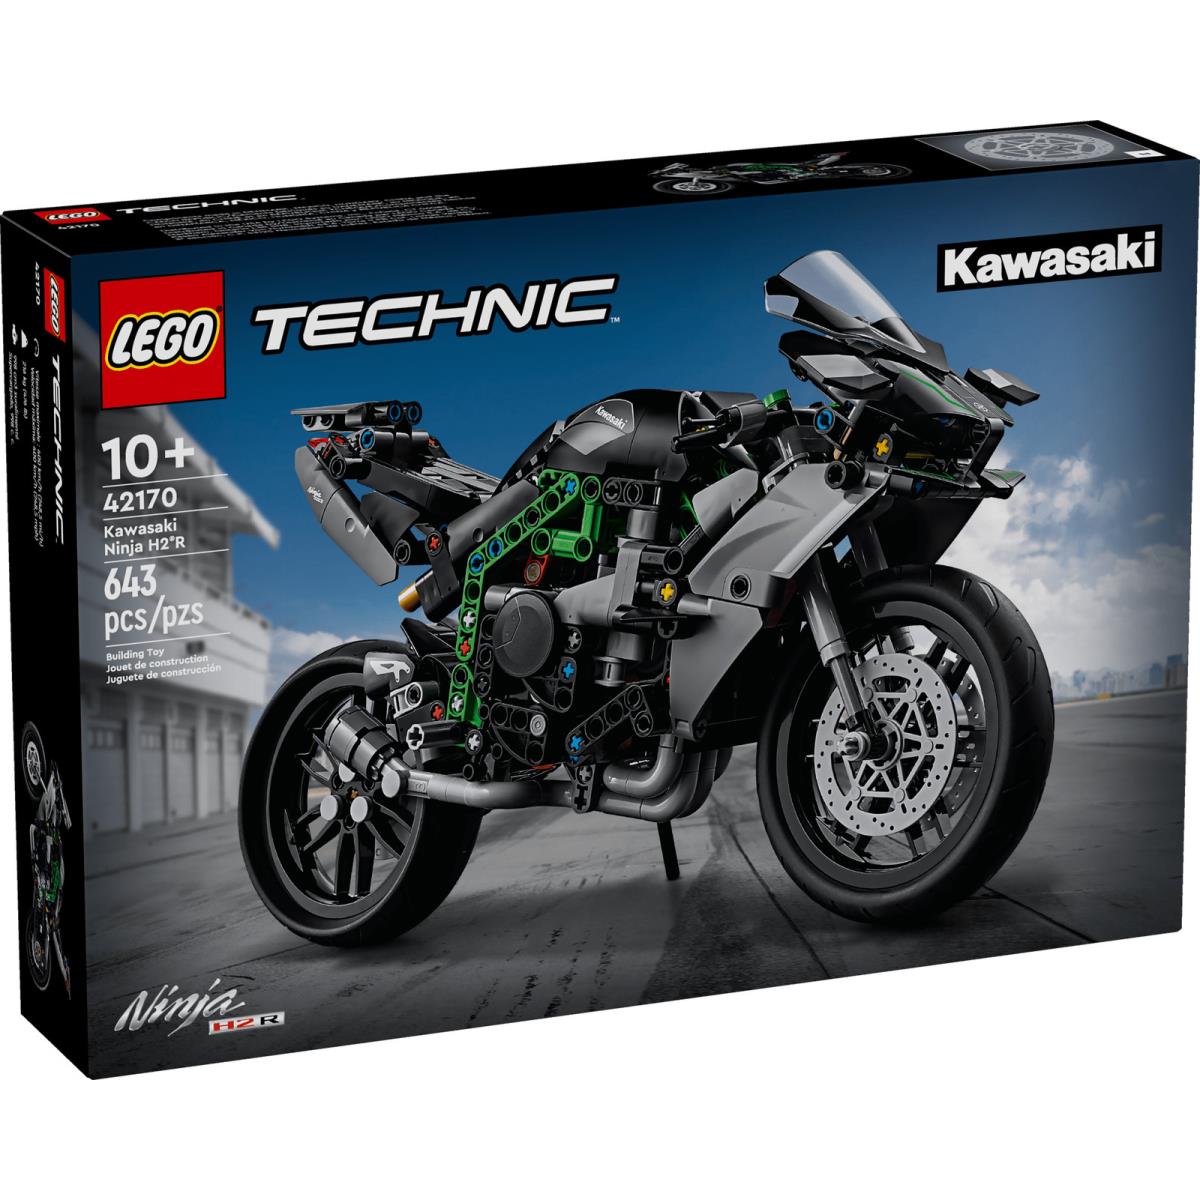 Lego Technic Kawasaki Ninja H2R Motorcycle 42170 Building Toy Set Room D Cor